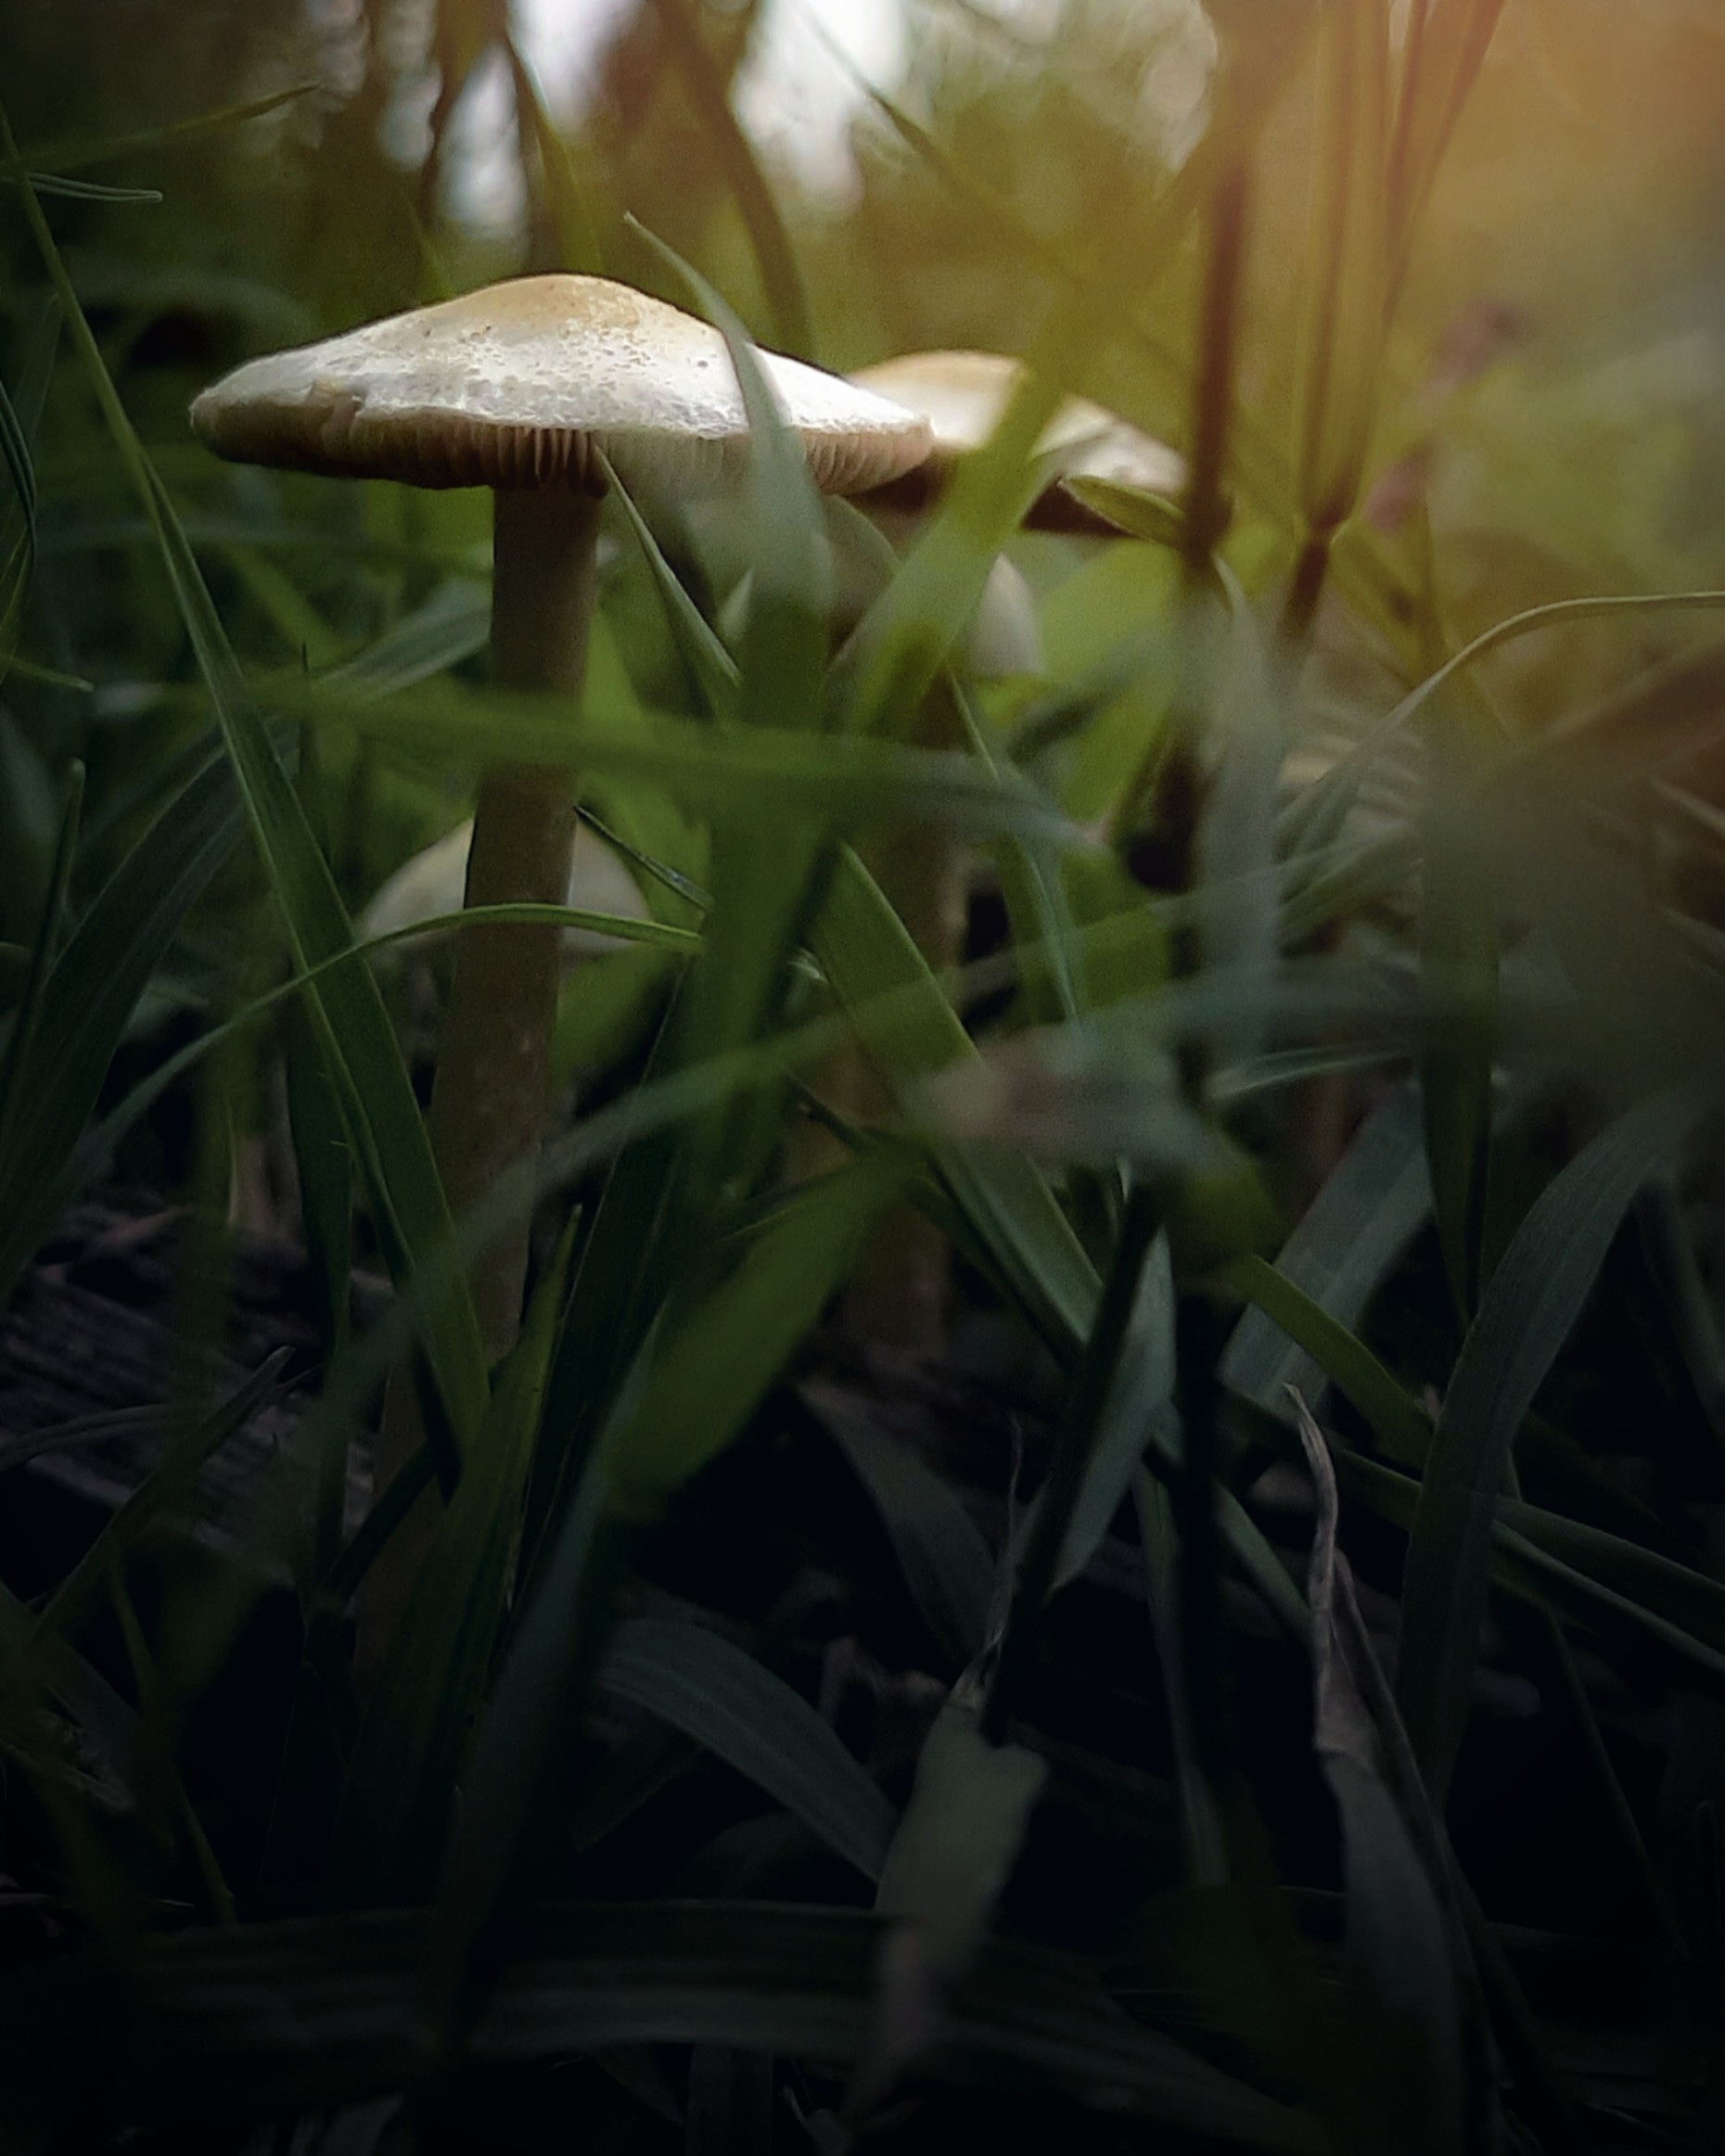 Mushroom plants in grass